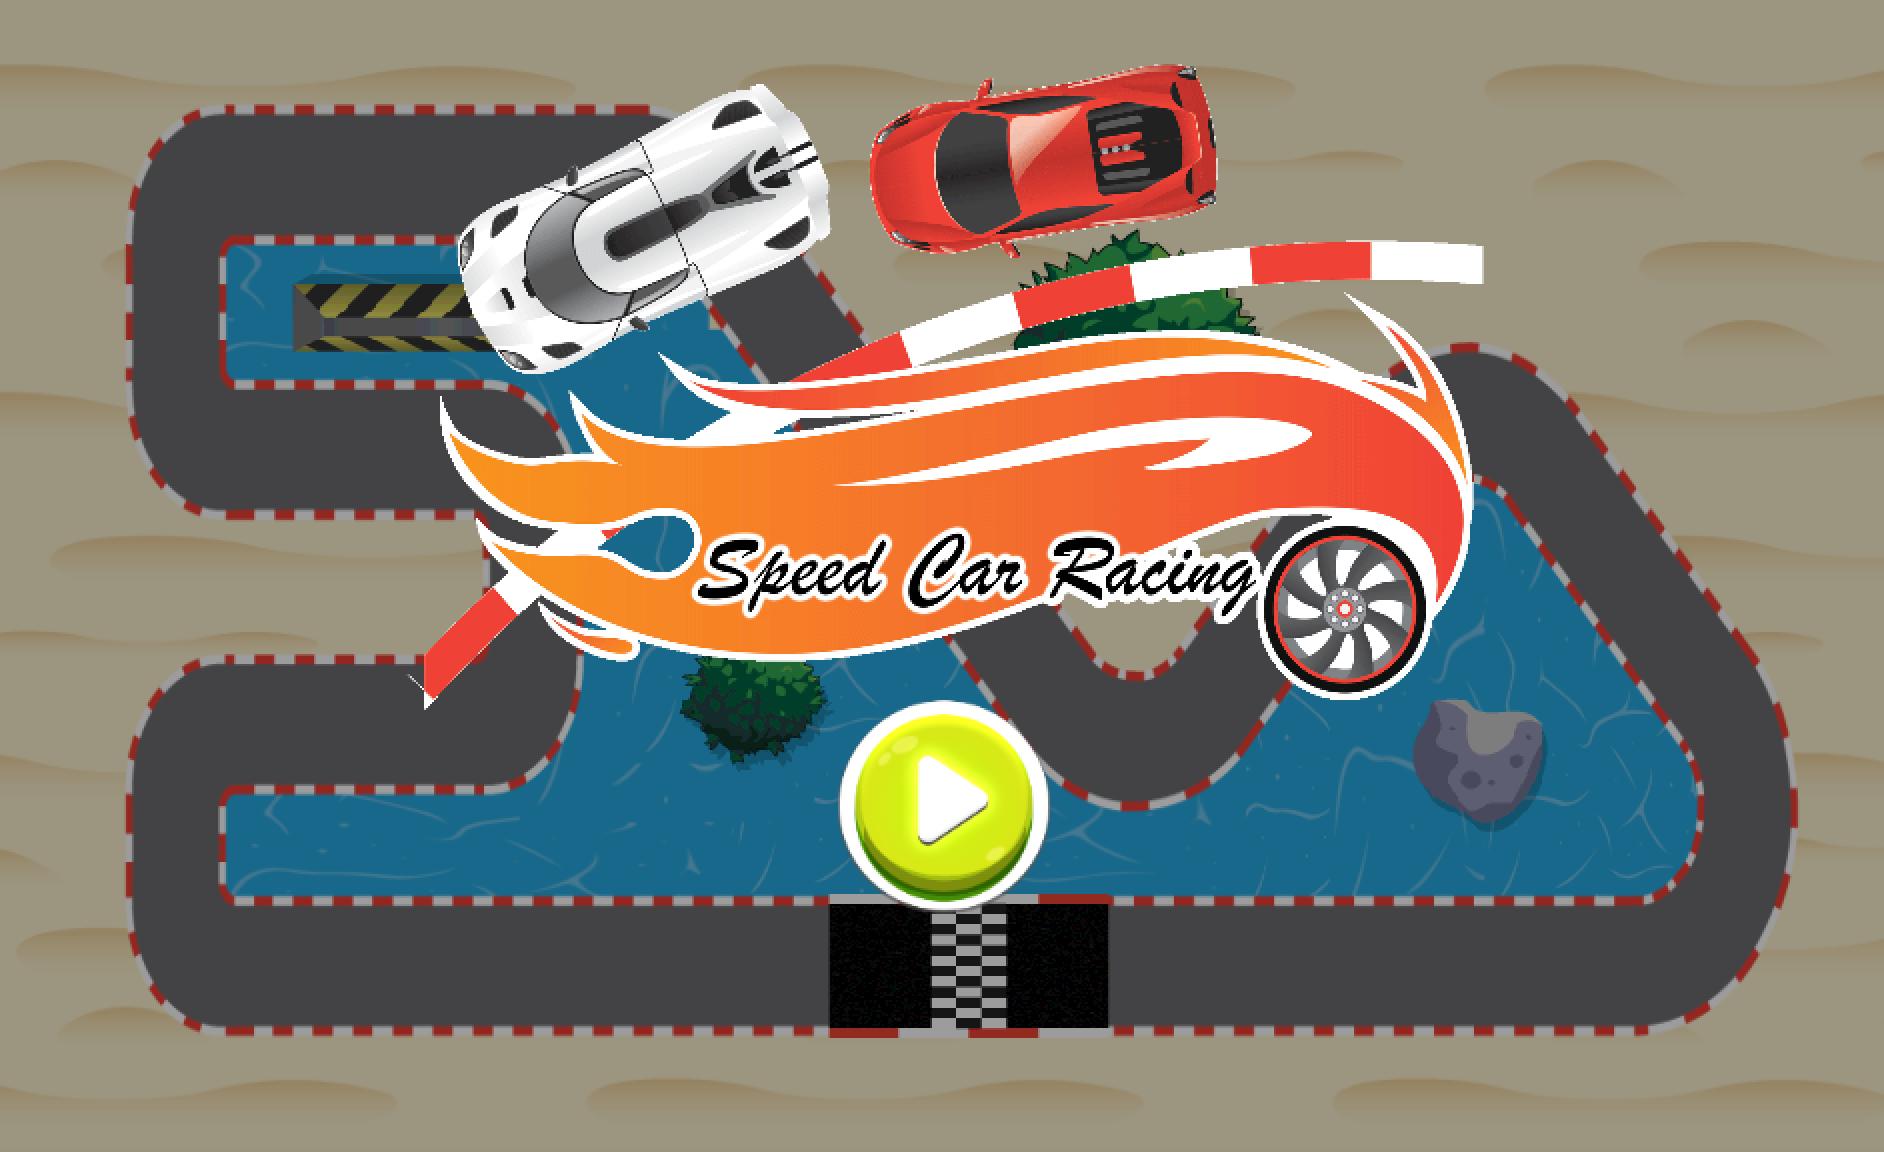 Lightning Speed car Racing игра. Картинг плакат. Знак вызов на гонках. Line Speed Race poster.